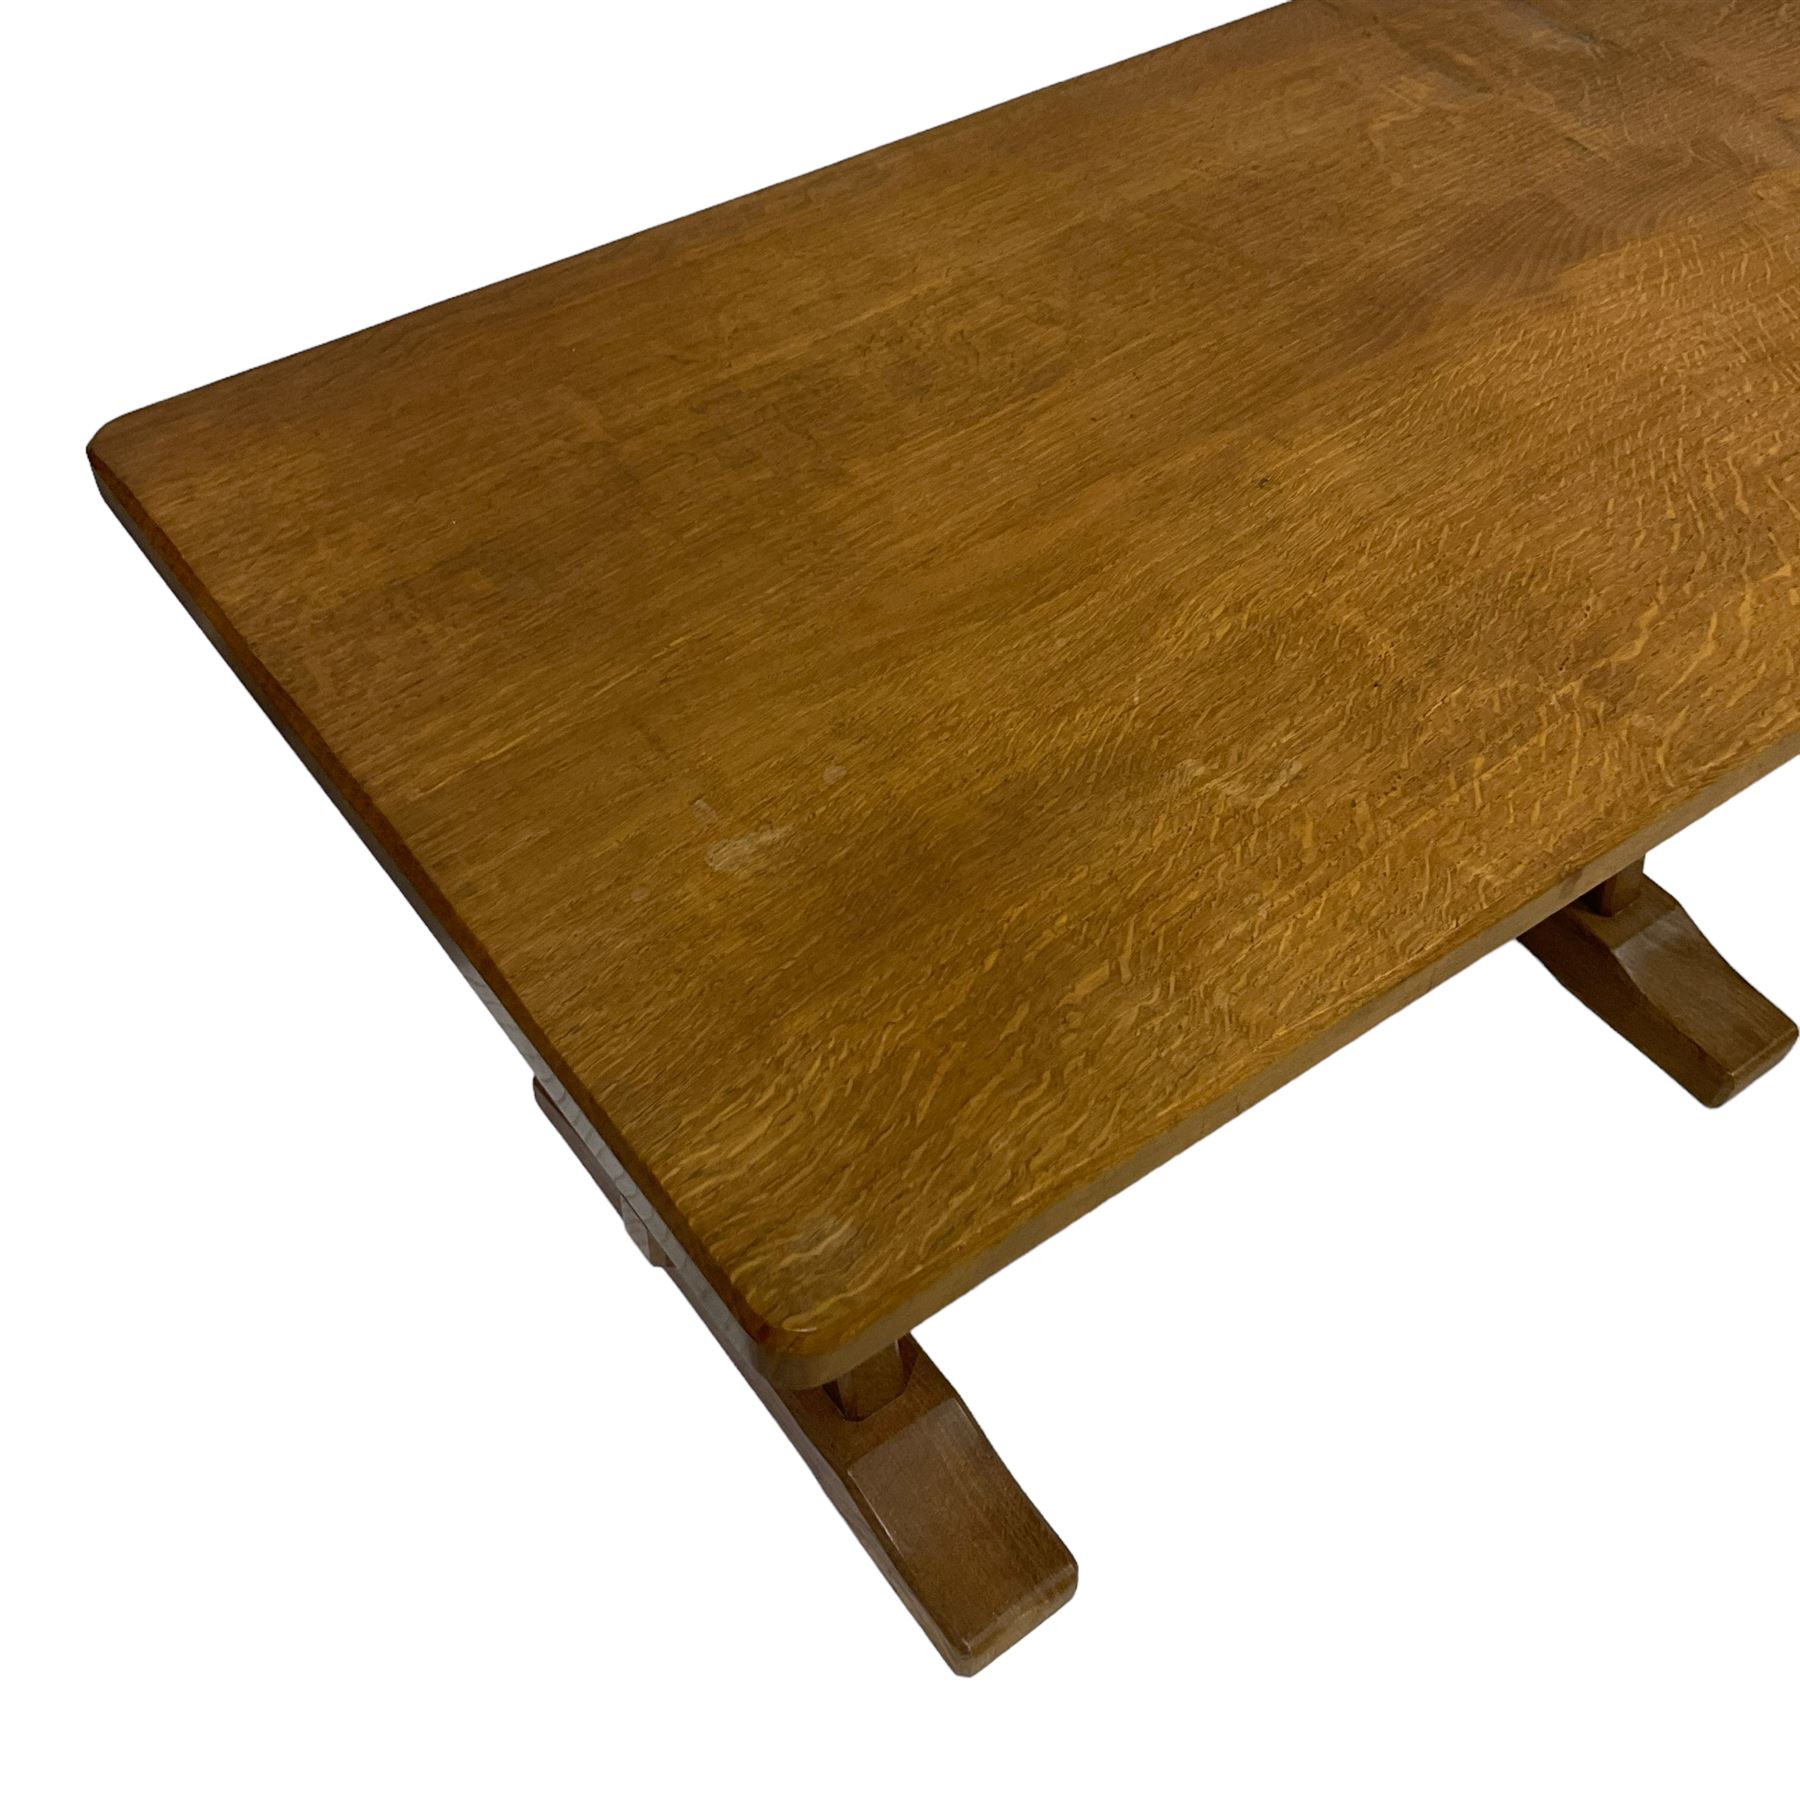 Acornman - oak coffee table - Image 5 of 5